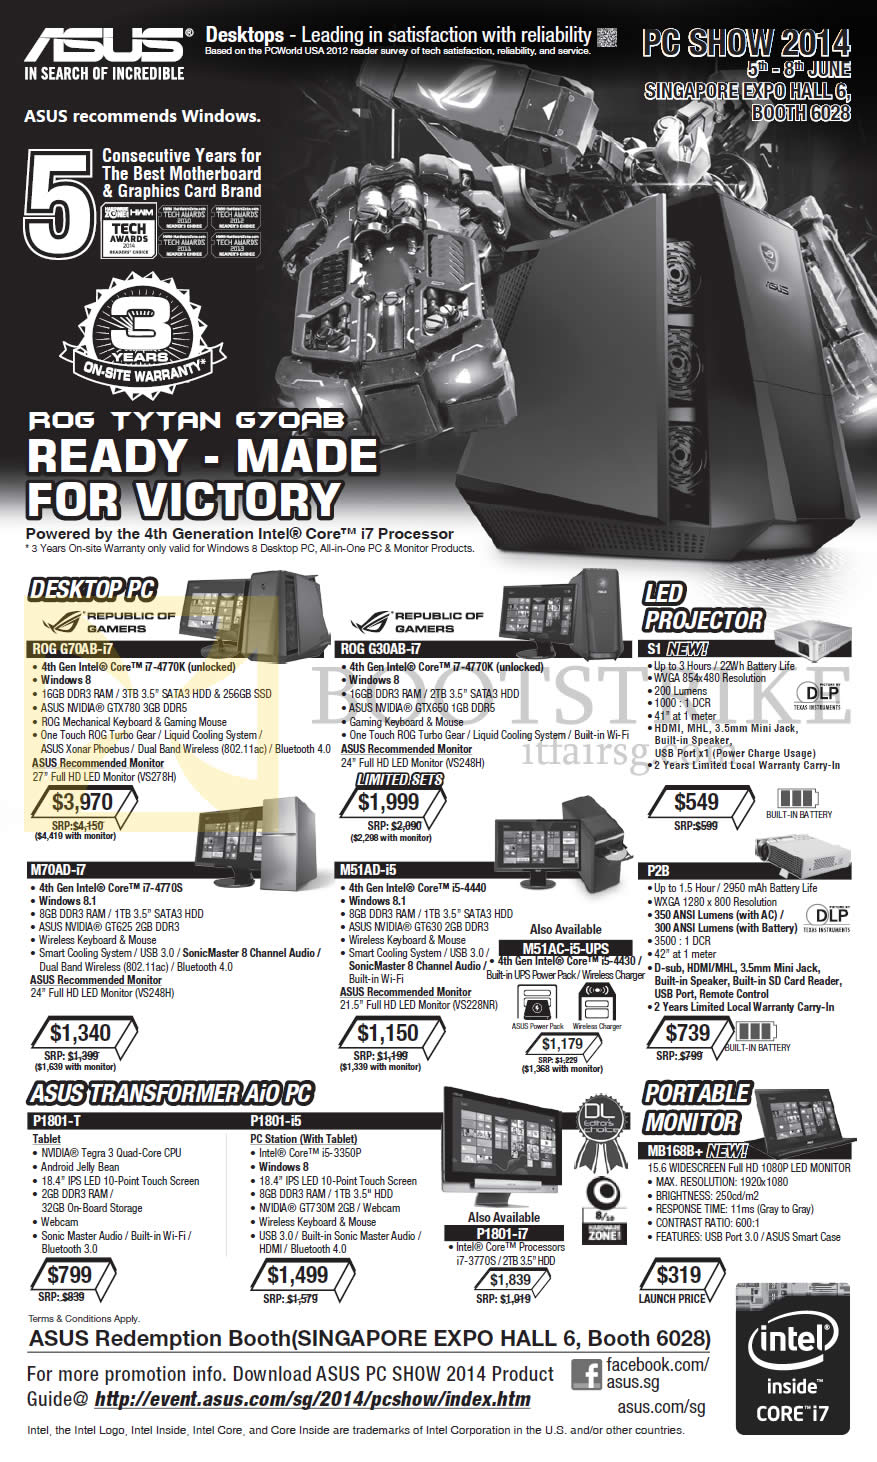 PC SHOW 2014 price list image brochure of ASUS Desktop PCs, AIOs, Monitors, Projectors, ROG Tytan G70AB, G30AB, M70AD, M51AD, P1801-T, MB1688Plus, S1, P2B